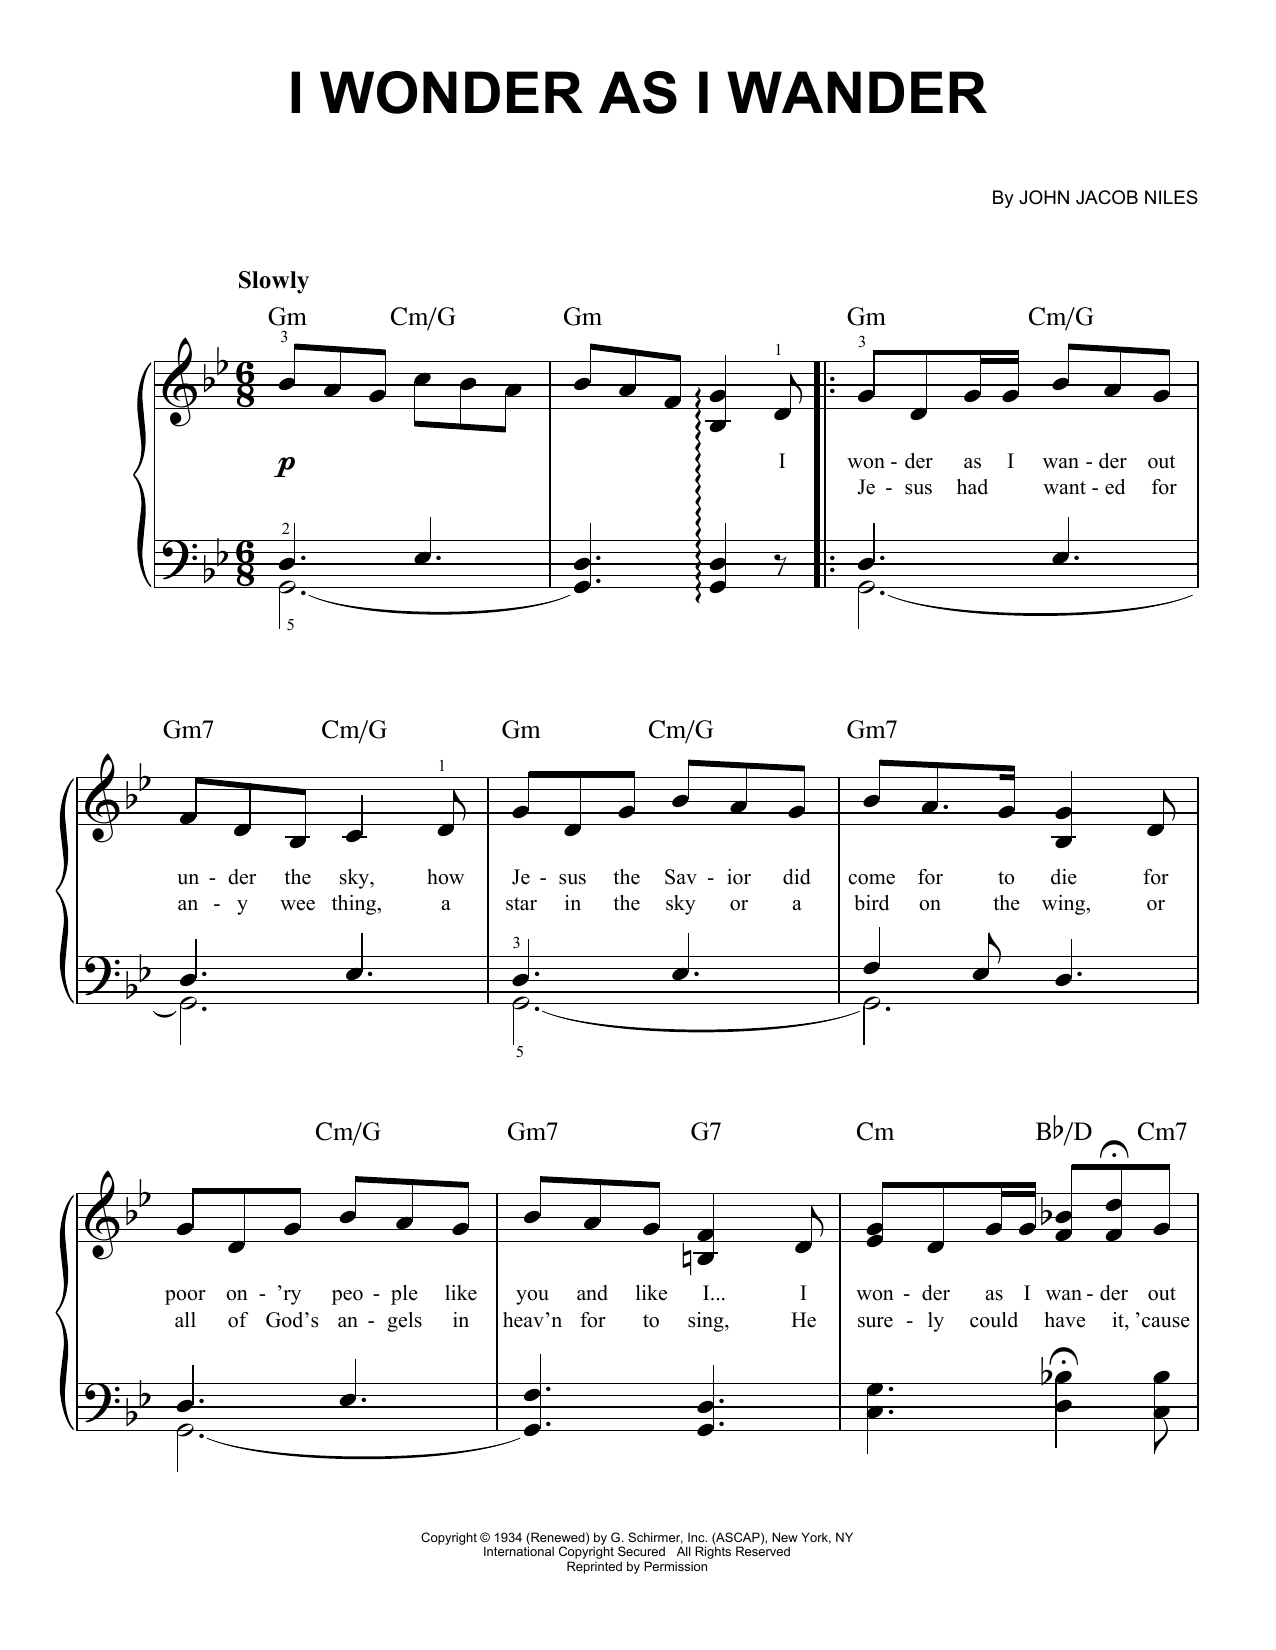 John Jacob Niles I Wonder As I Wander Sheet Music Notes & Chords for Super Easy Piano - Download or Print PDF